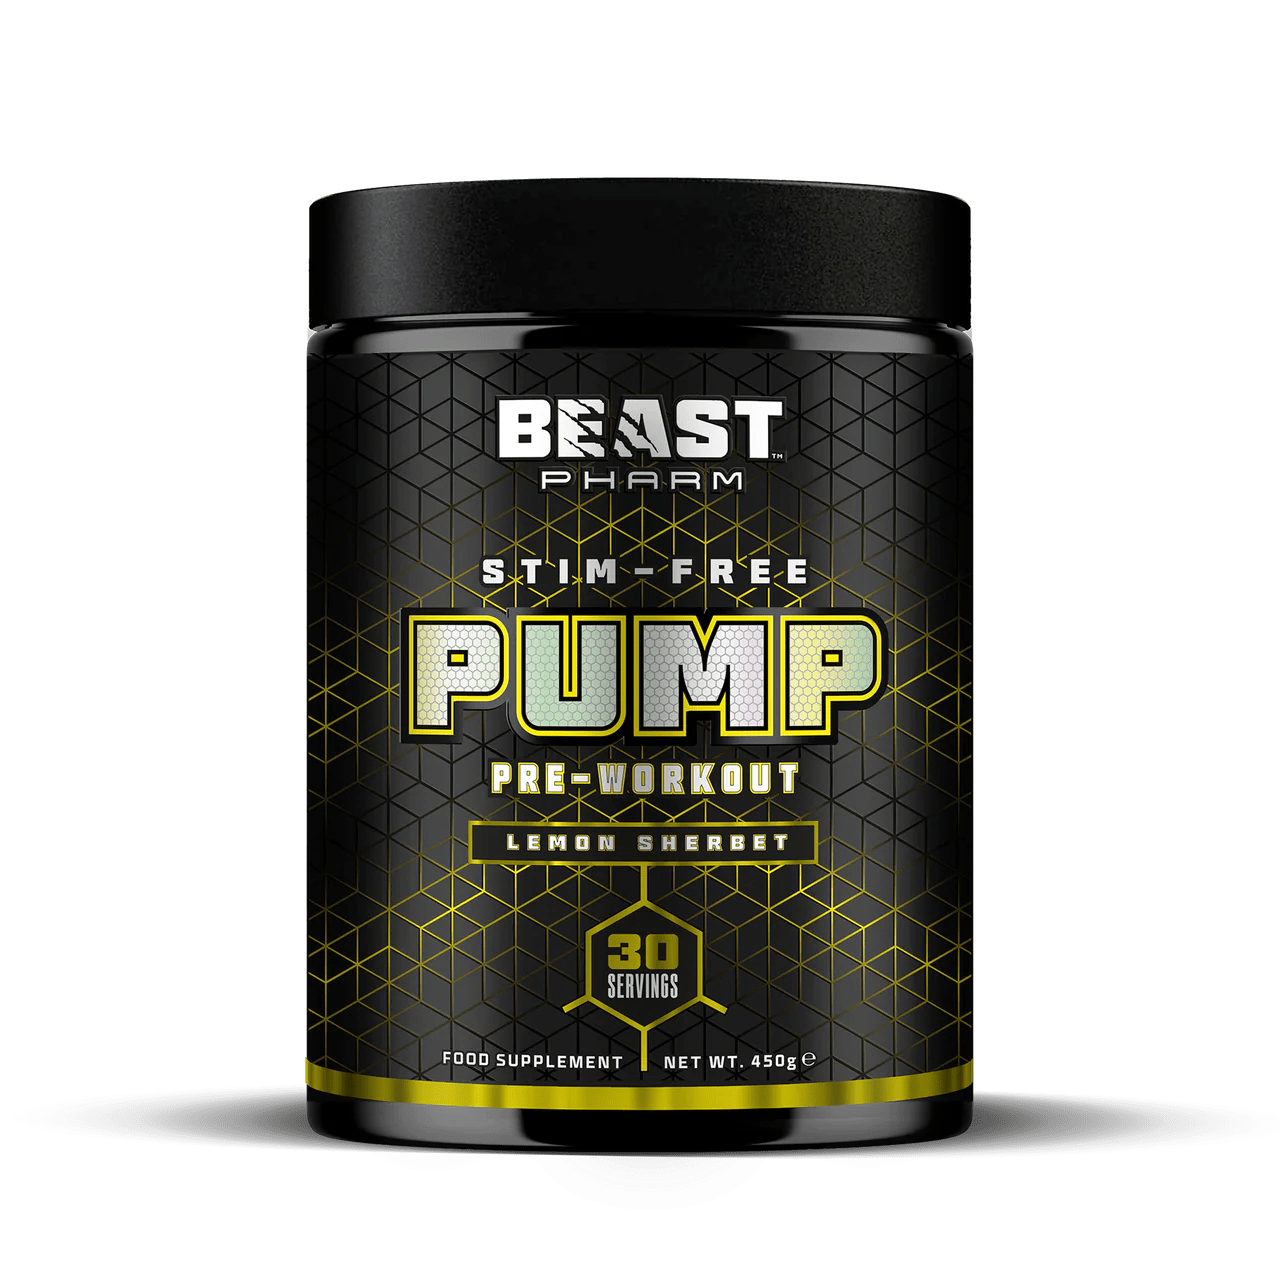 Beast PharmPumpStim Free Pre-WorkoutRED SUPPS